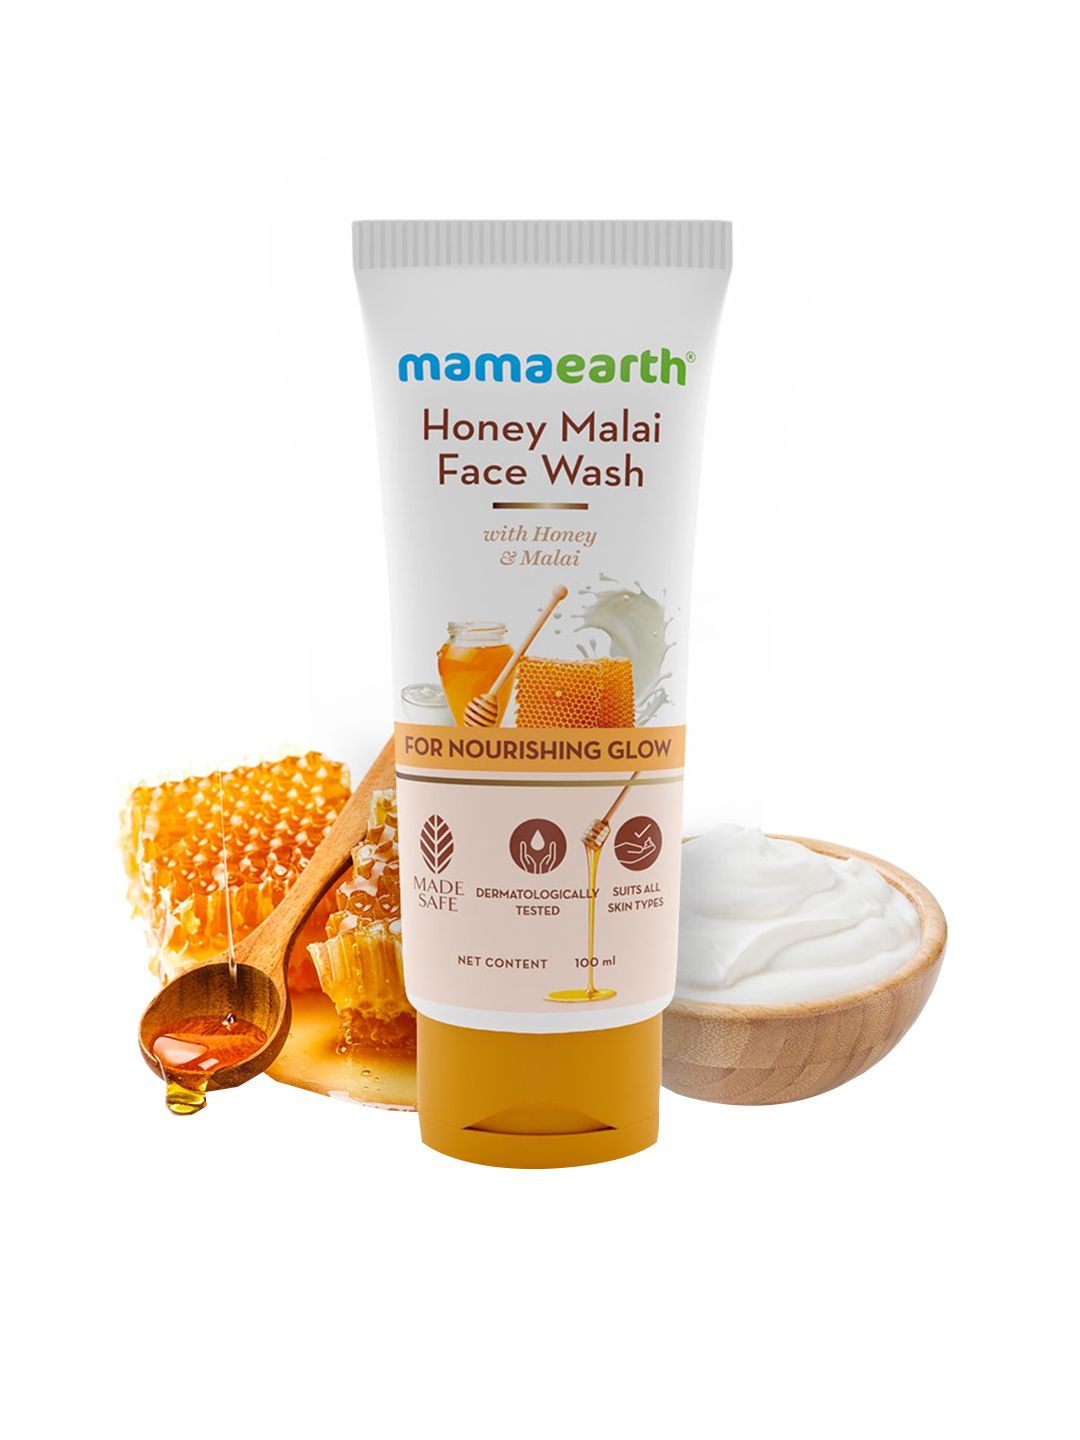 Mamaearth Honey Malai Face Wash with Coconut Oil & Vitamin E for Nourishing Glow - 100ml